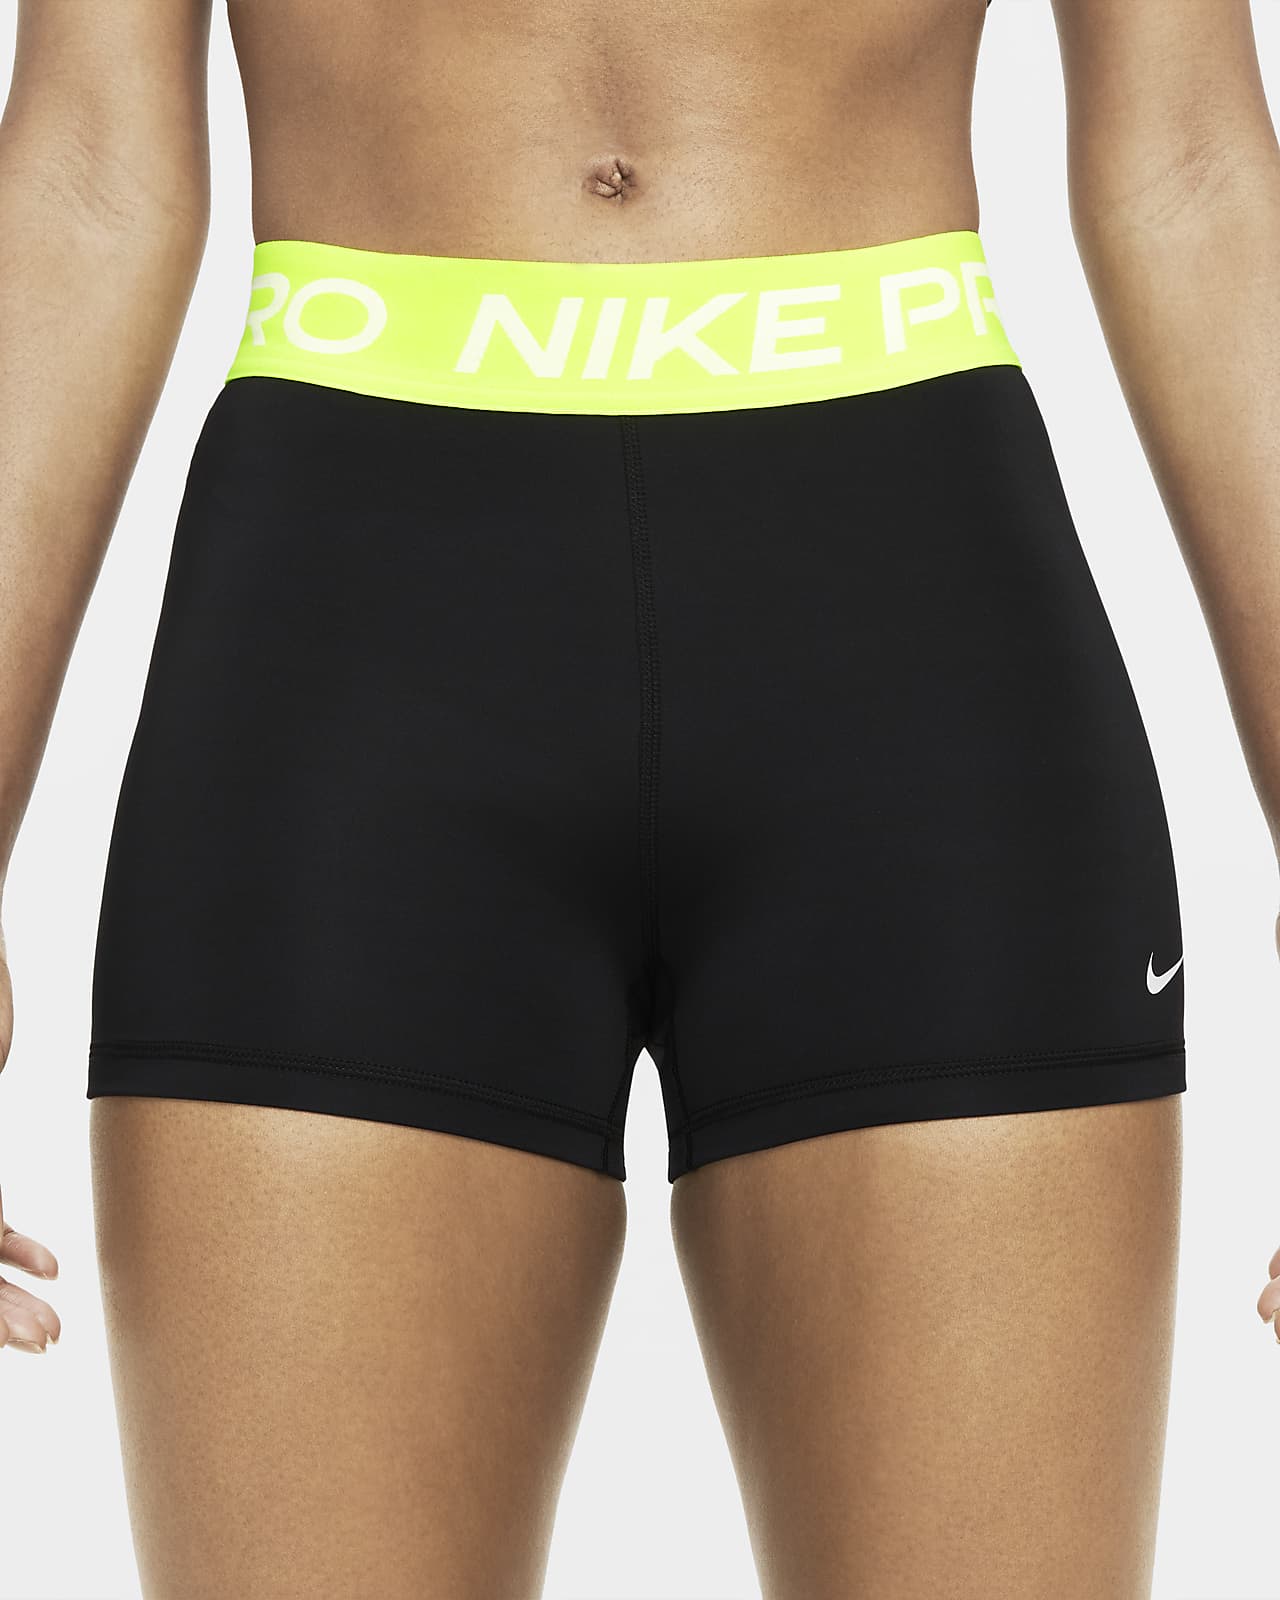 Nike Pro Women's 3" Shorts.